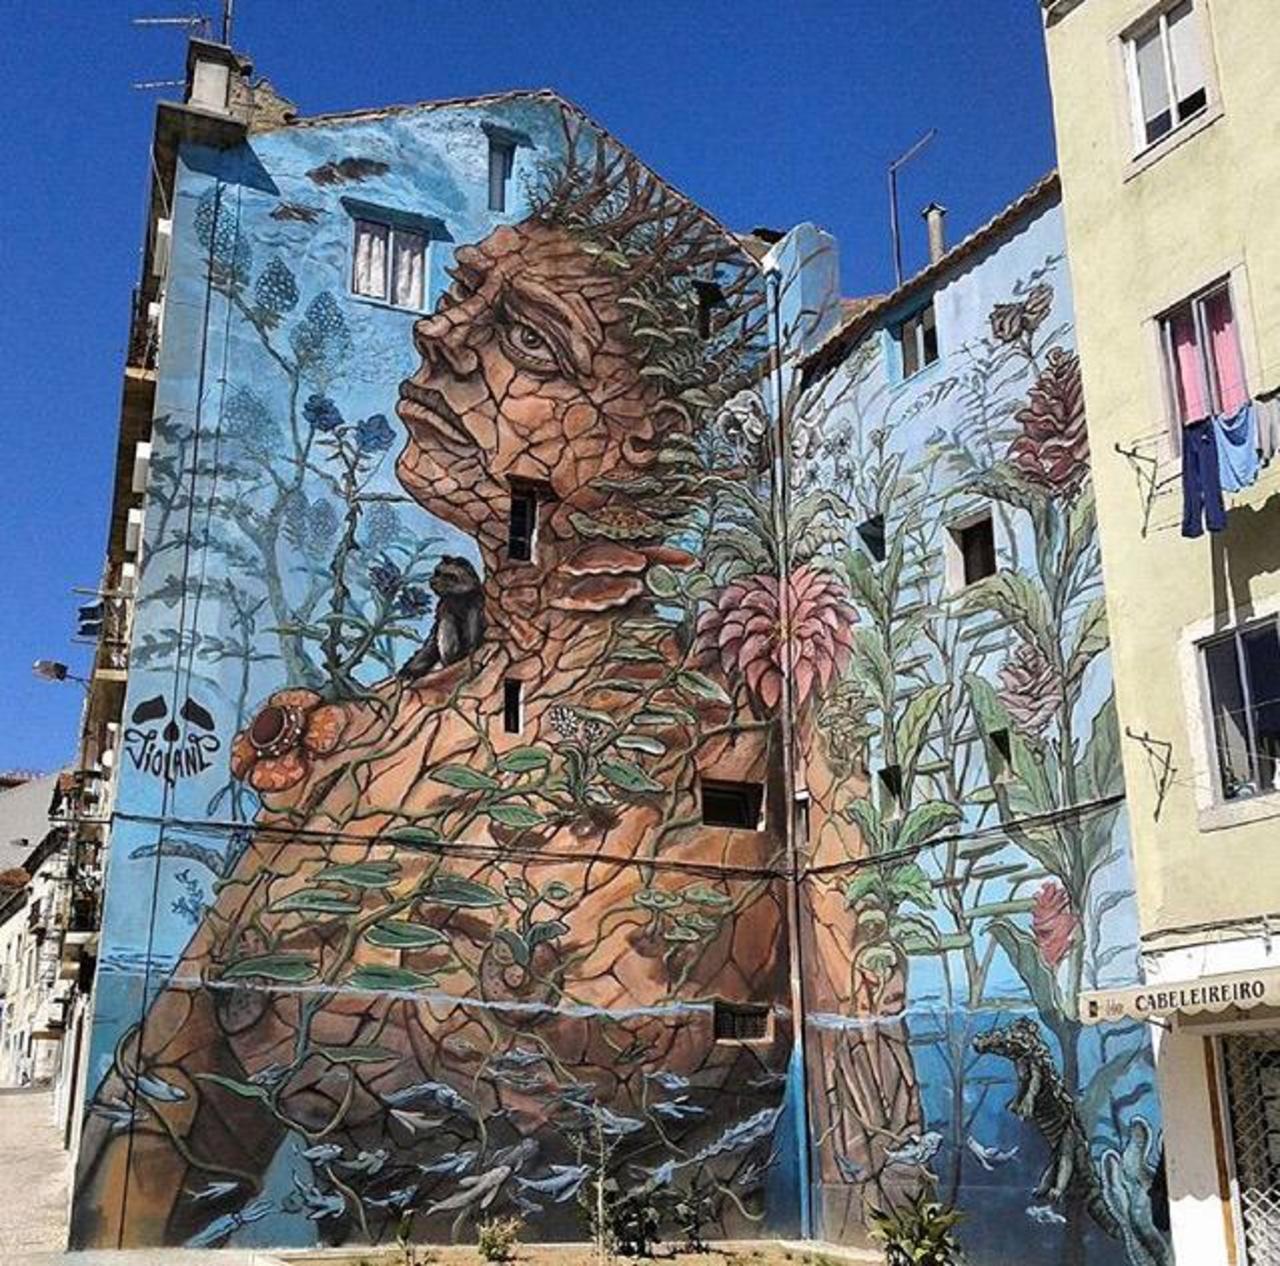 Street Art by Violant 

#art #graffiti #mural #streetart http://t.co/FYL6IAYAX7